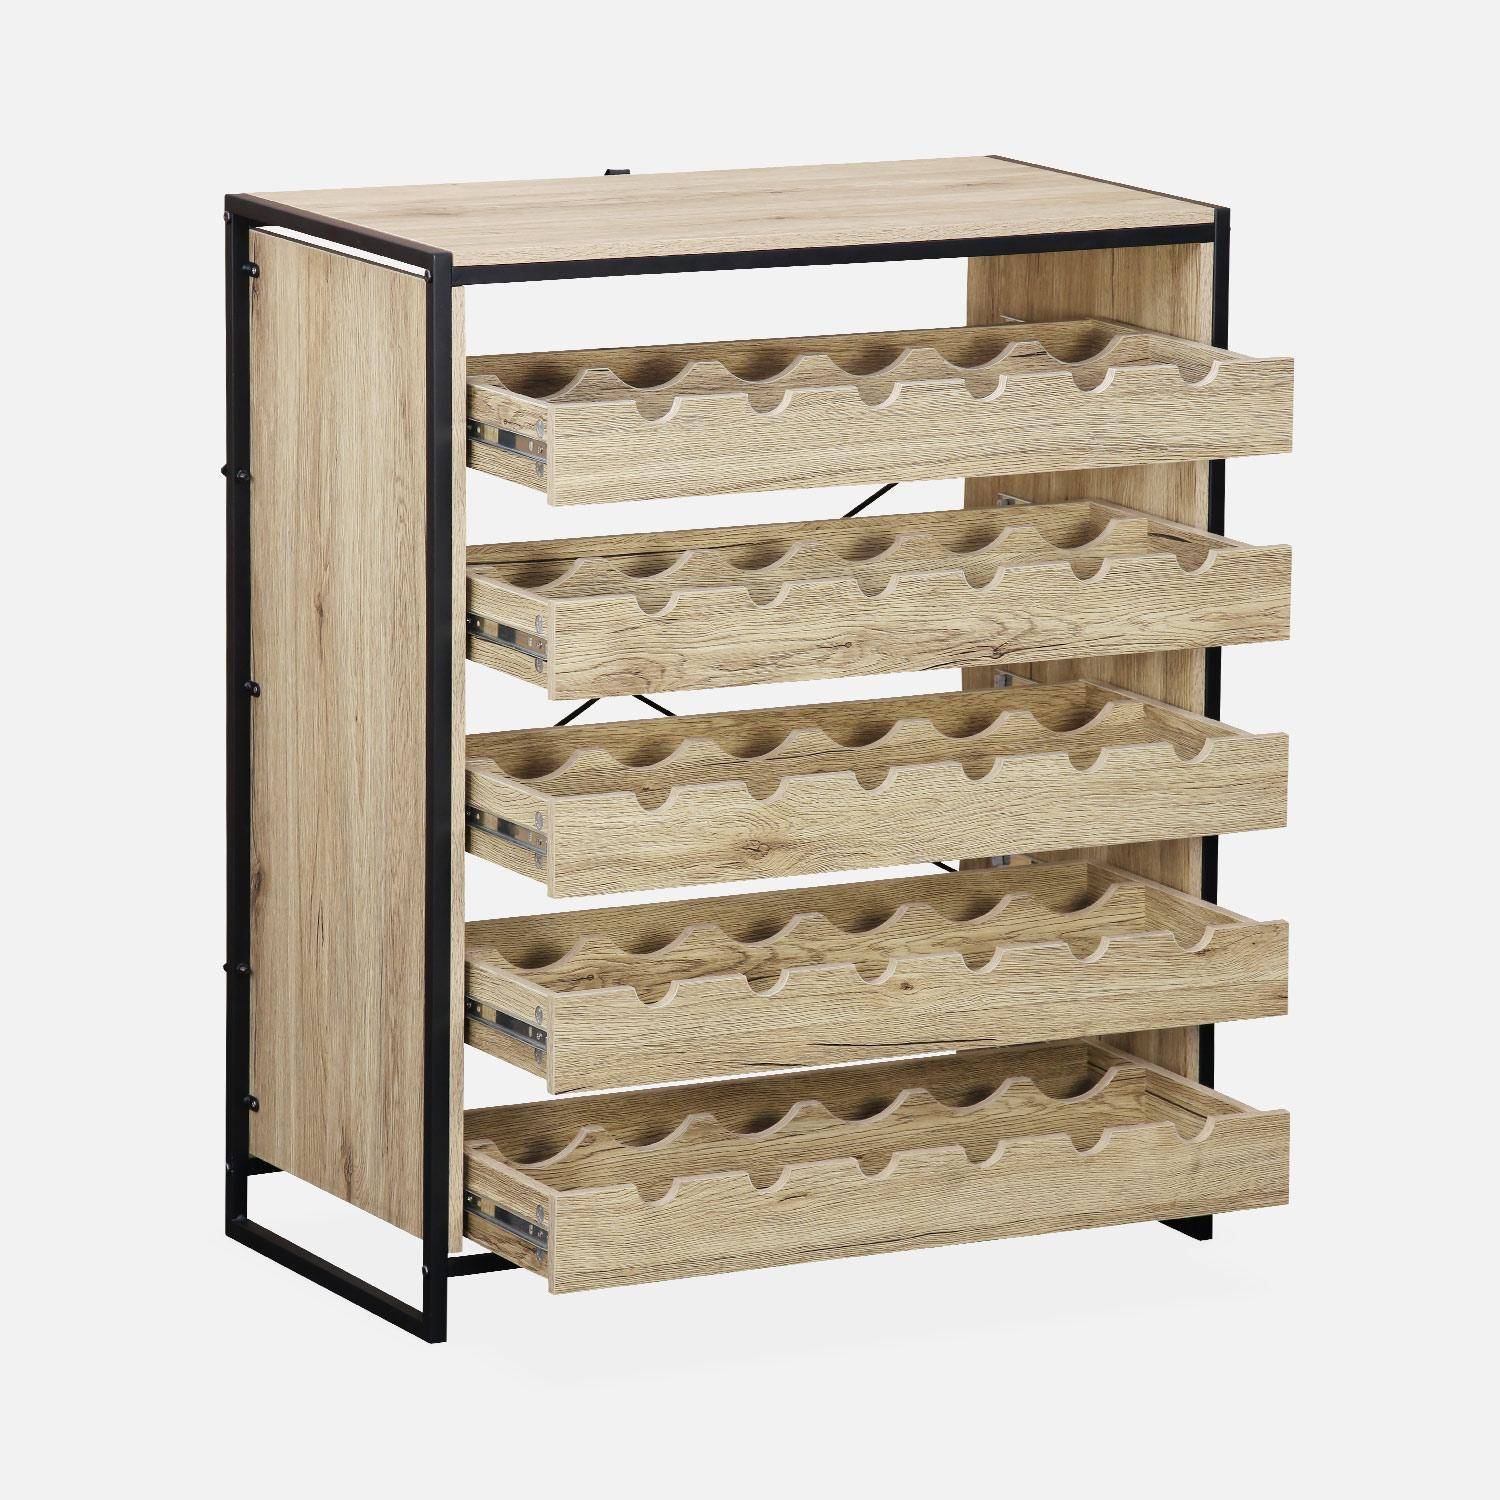 Metal and wood-effect wine rack with 5 shelves, 75x40x90cm - Loft,sweeek,Photo7